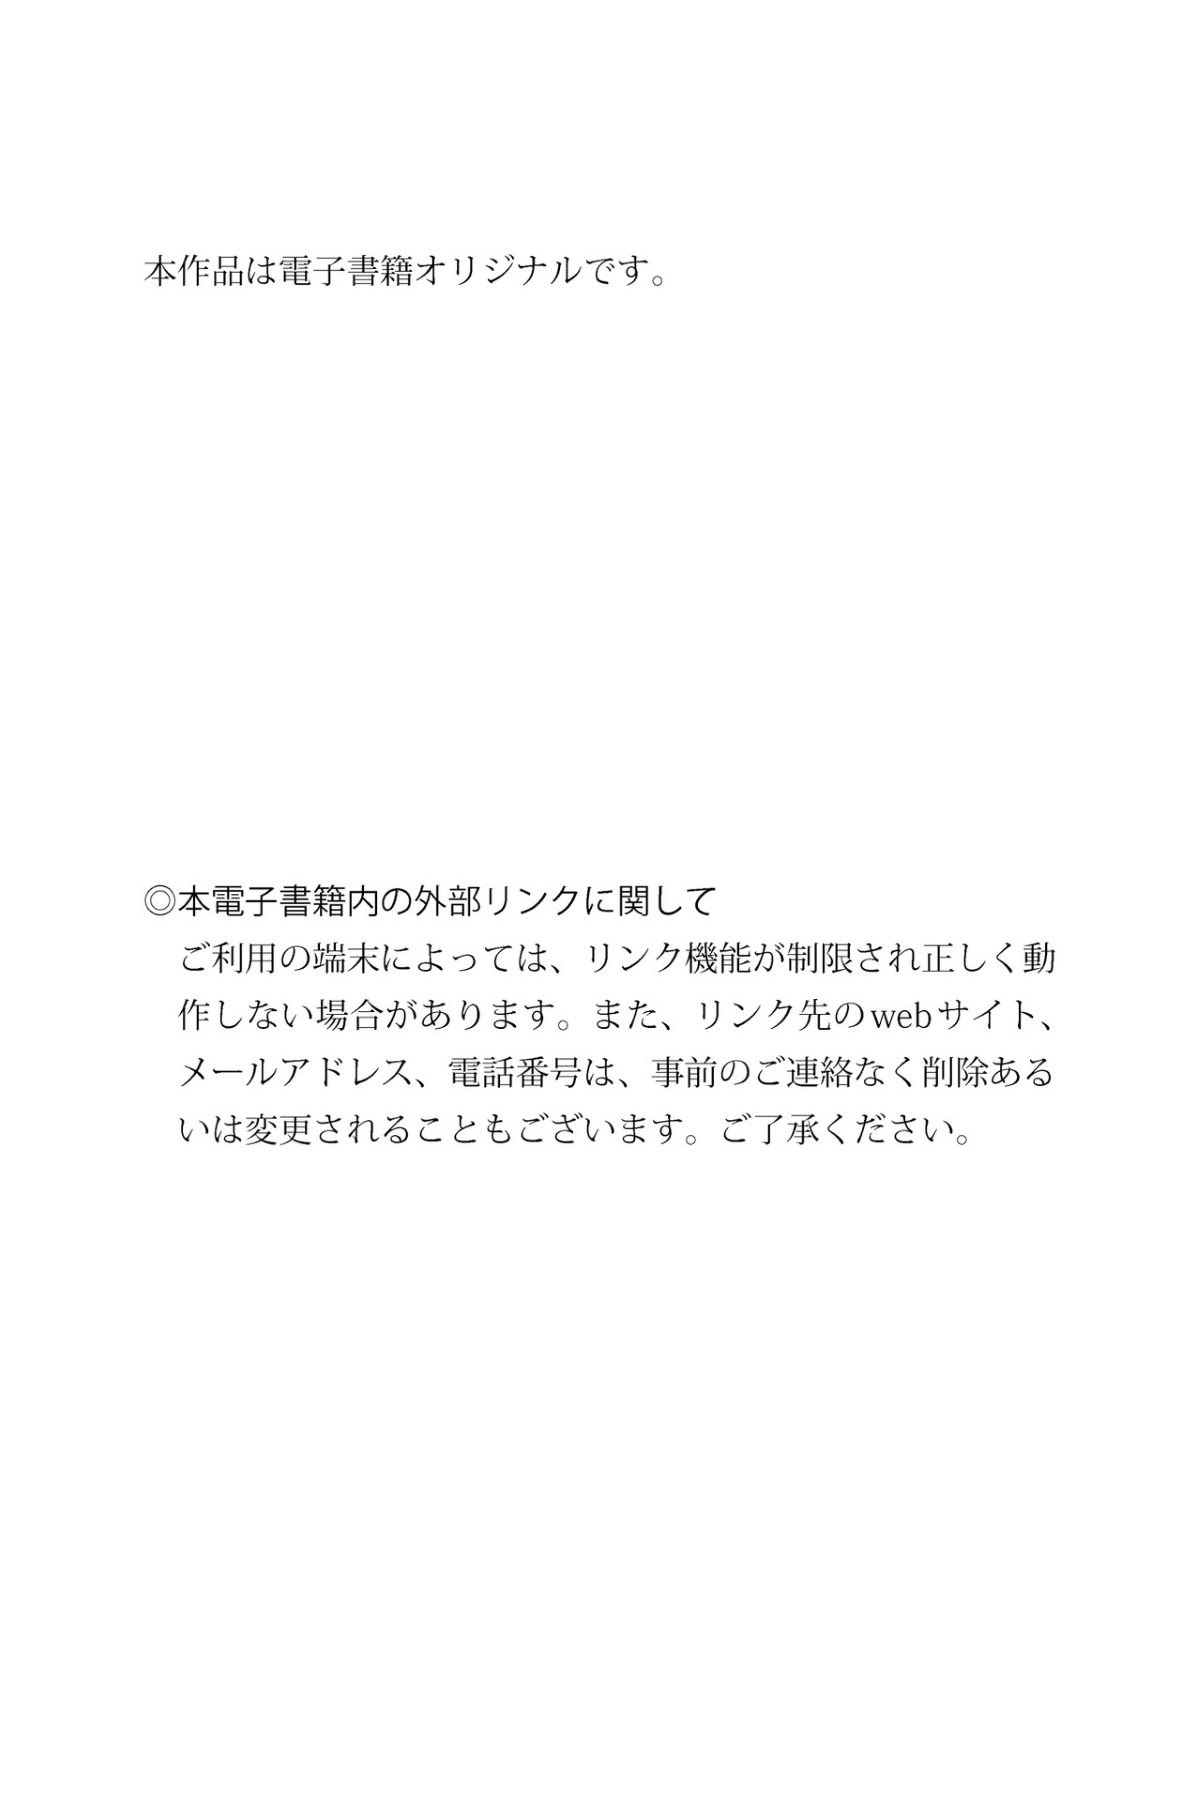 FRIDAY Digital Photobook Tsubasa Hazuki 葉月つばさ Miobiki Vol 2 澪引き Vol 2 2022 07 01 0121 1919219016.jpg